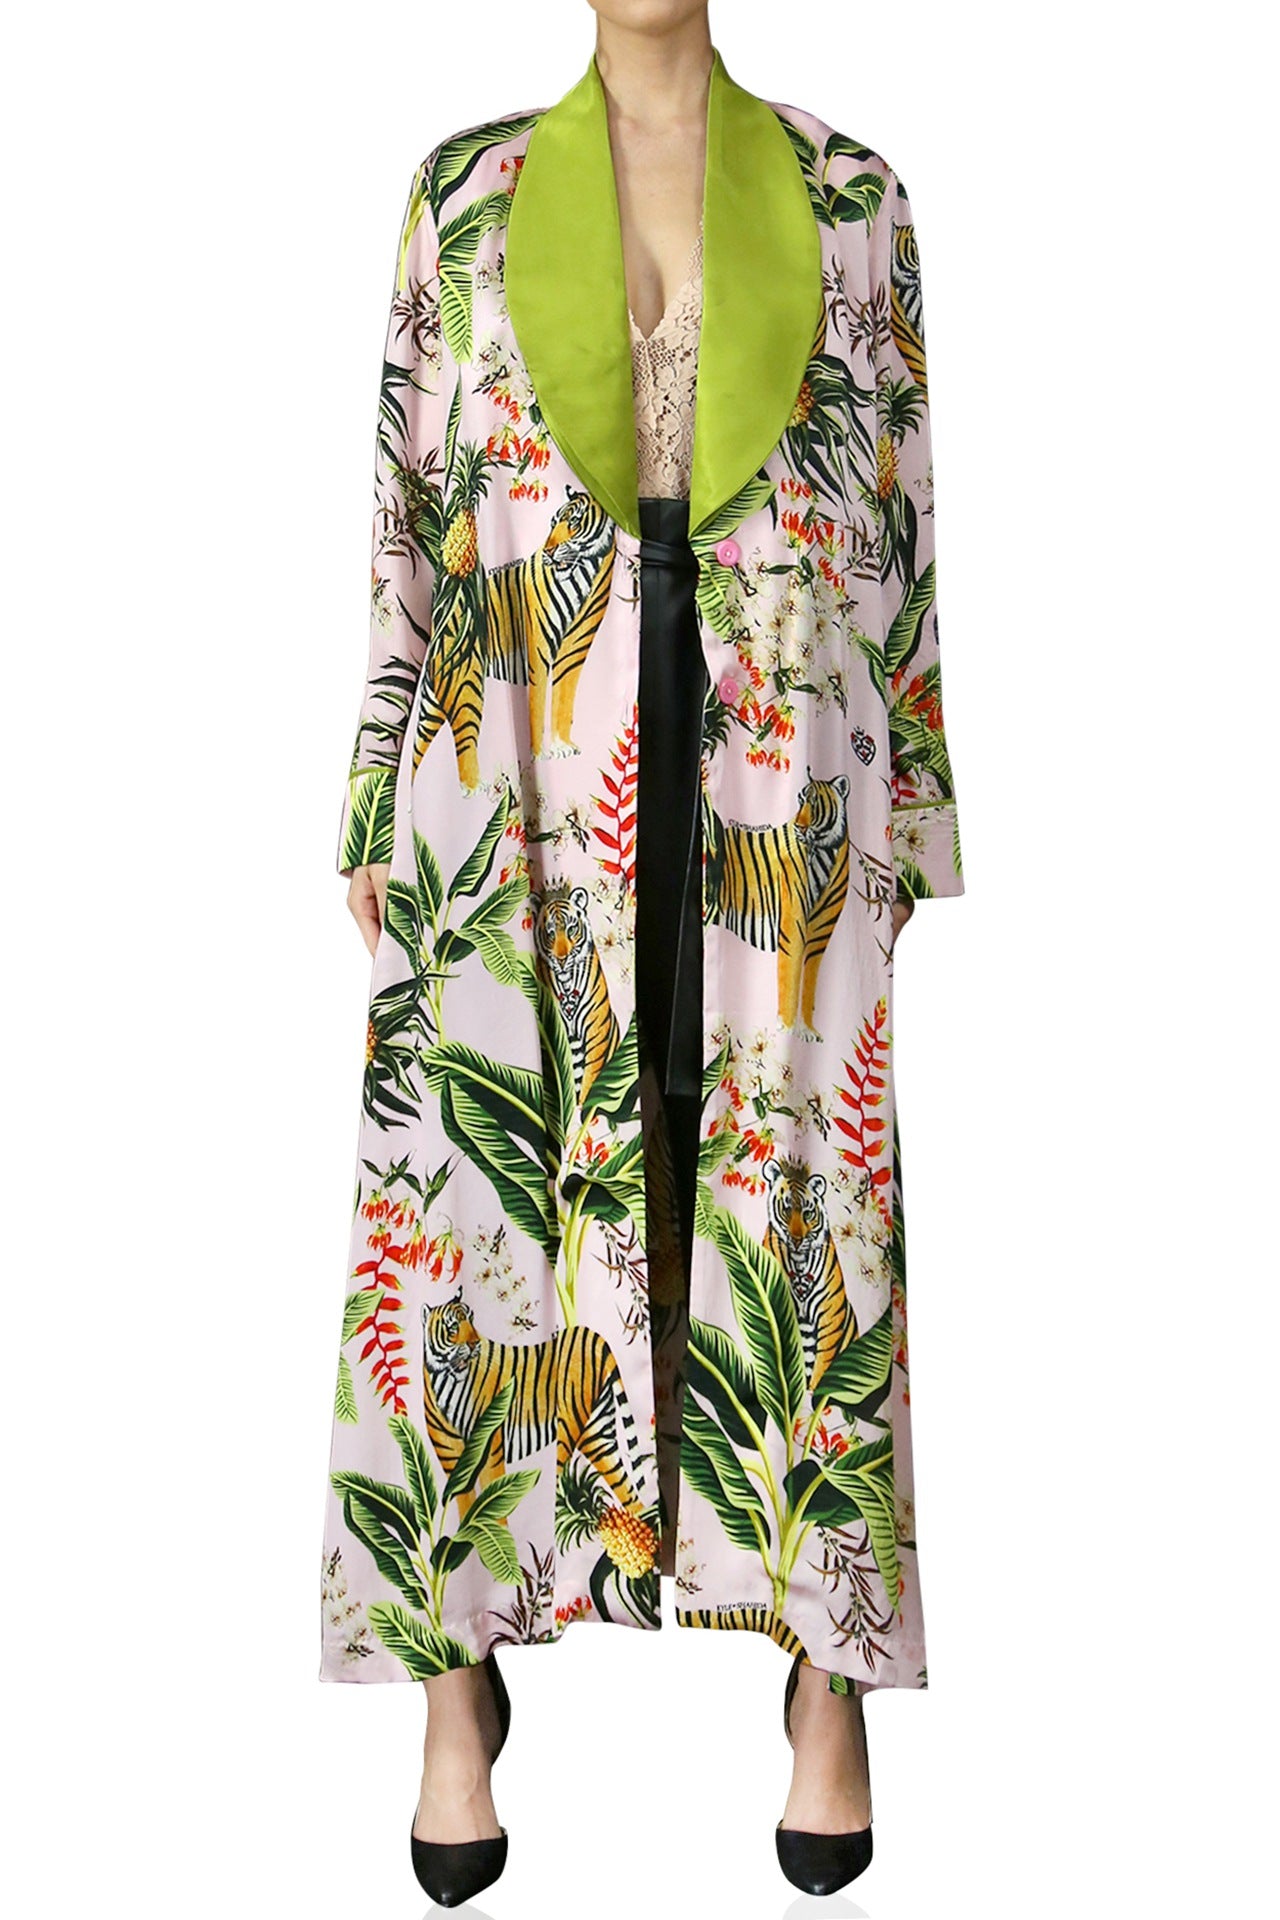 Designer-Robes-For-Women-By-Kyle-Richards